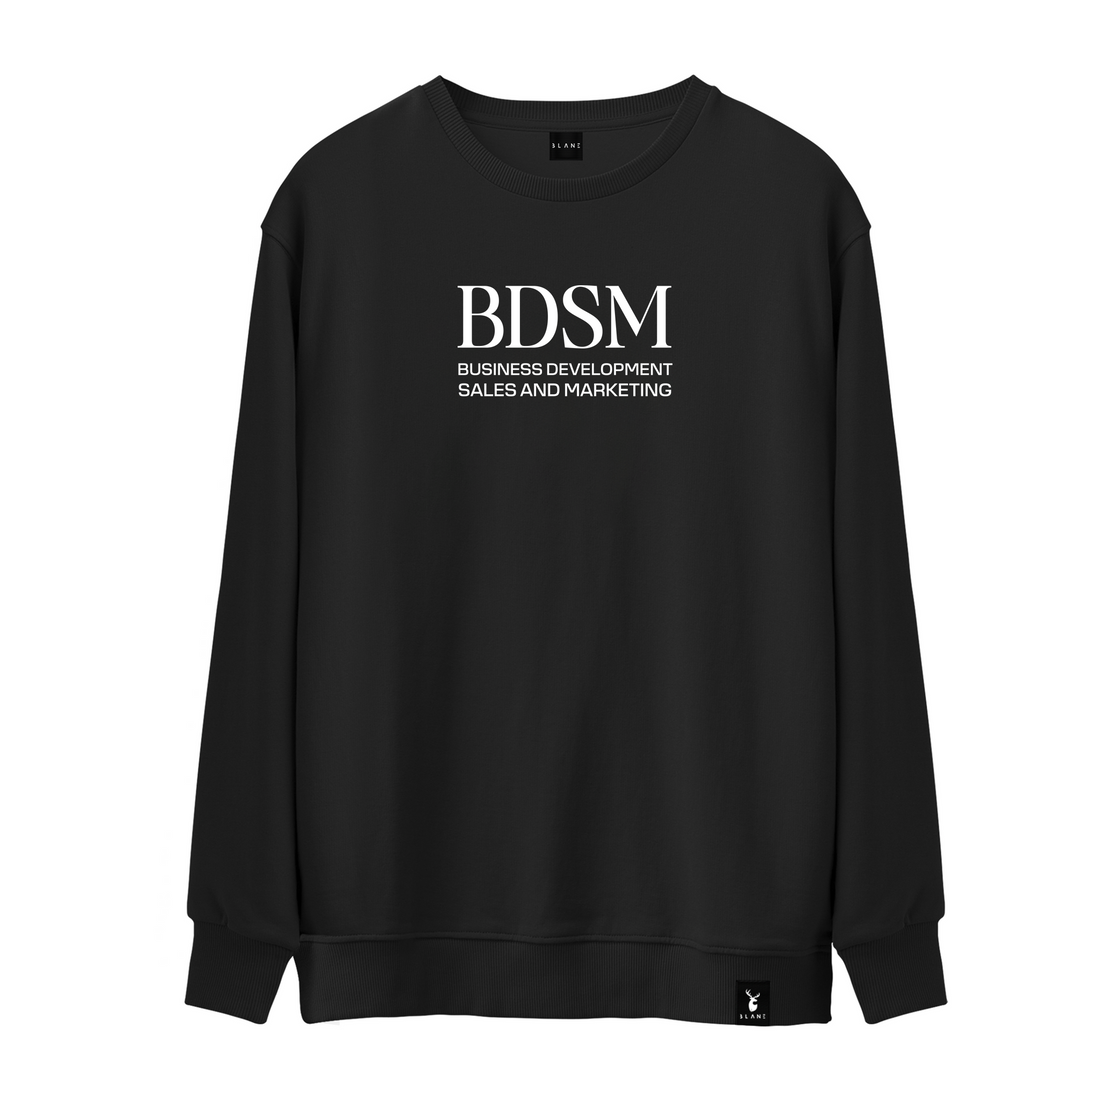 BDSM - Sweatshirt